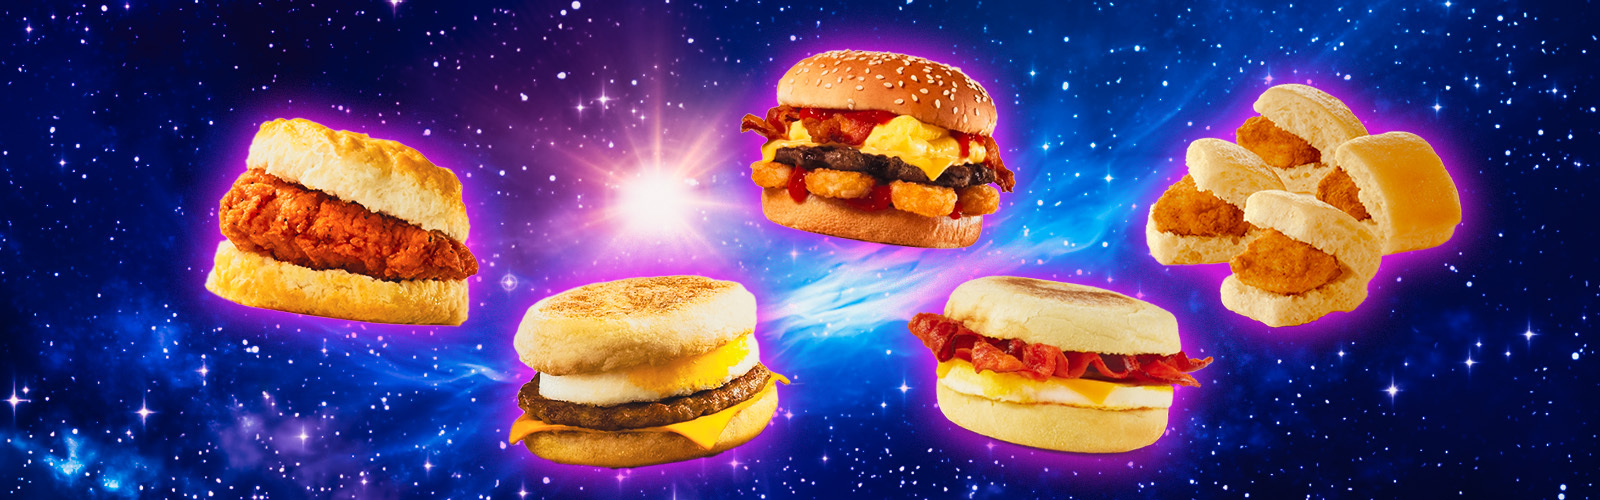 15 Best Breakfast Sandwiches In Fast Food Universe, Ranked